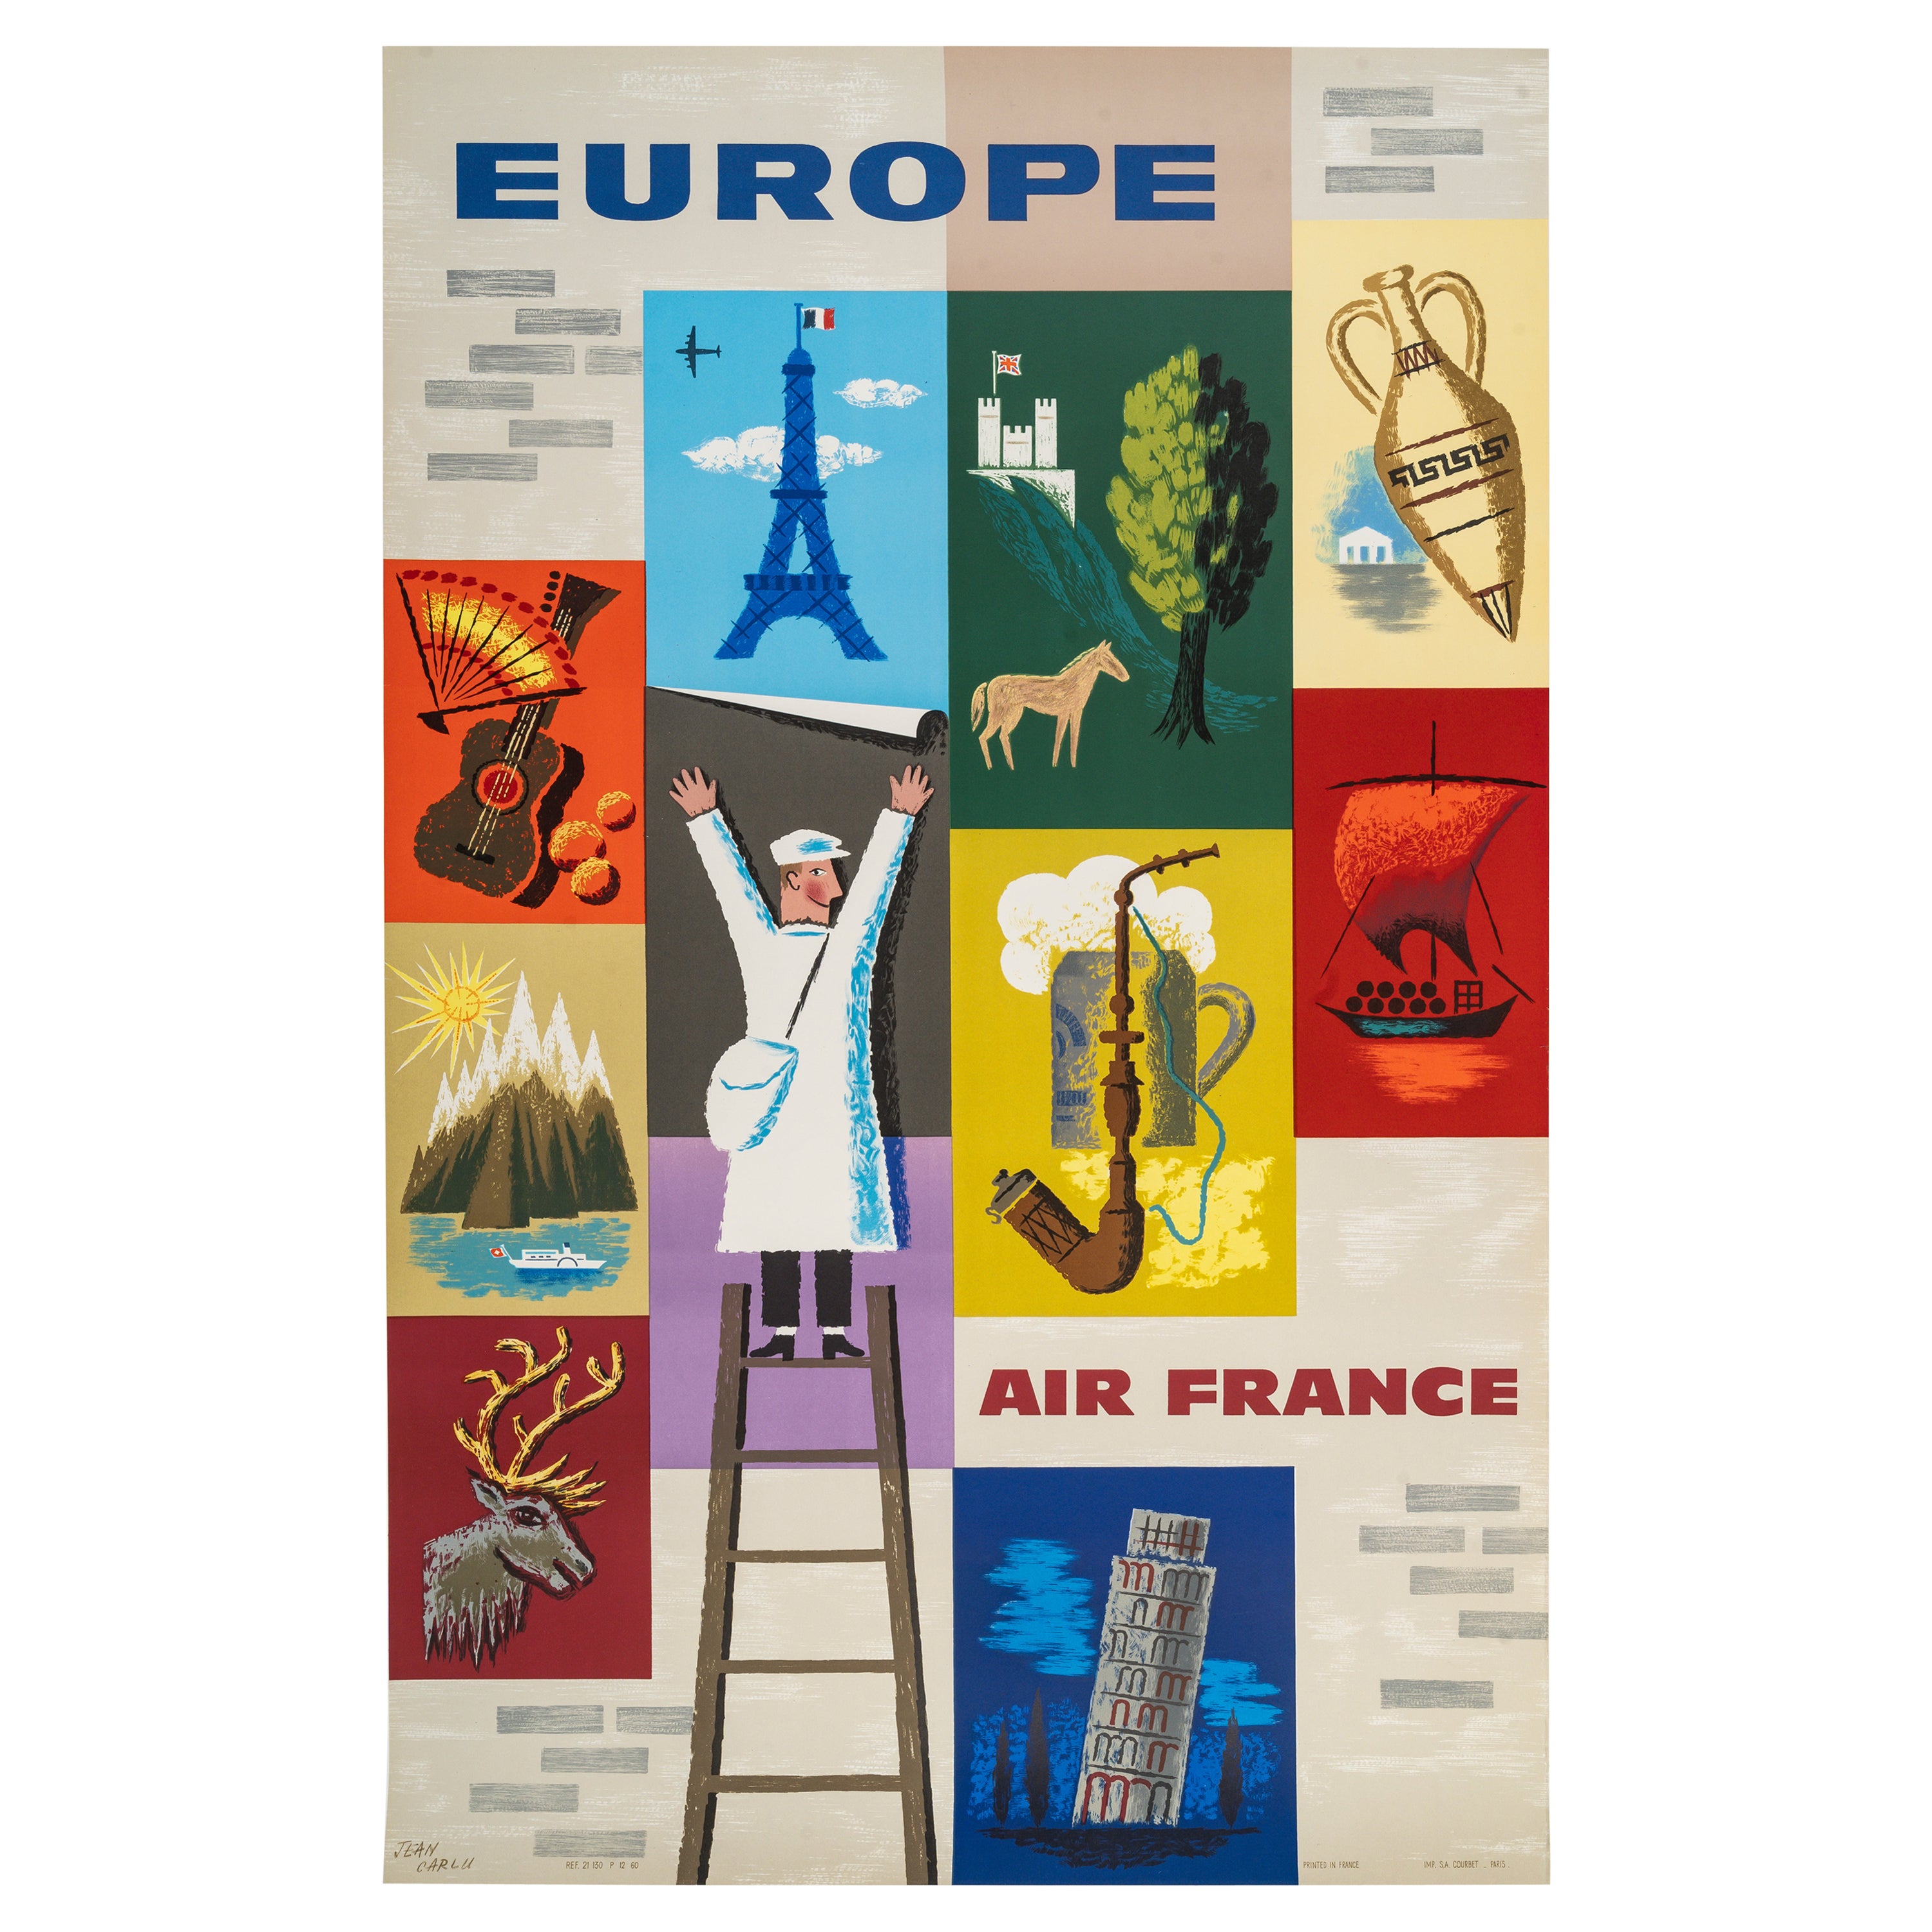 Carlu, Original Movie Poster, Air France Europe, Eiffel Tower, Aviation, 1957